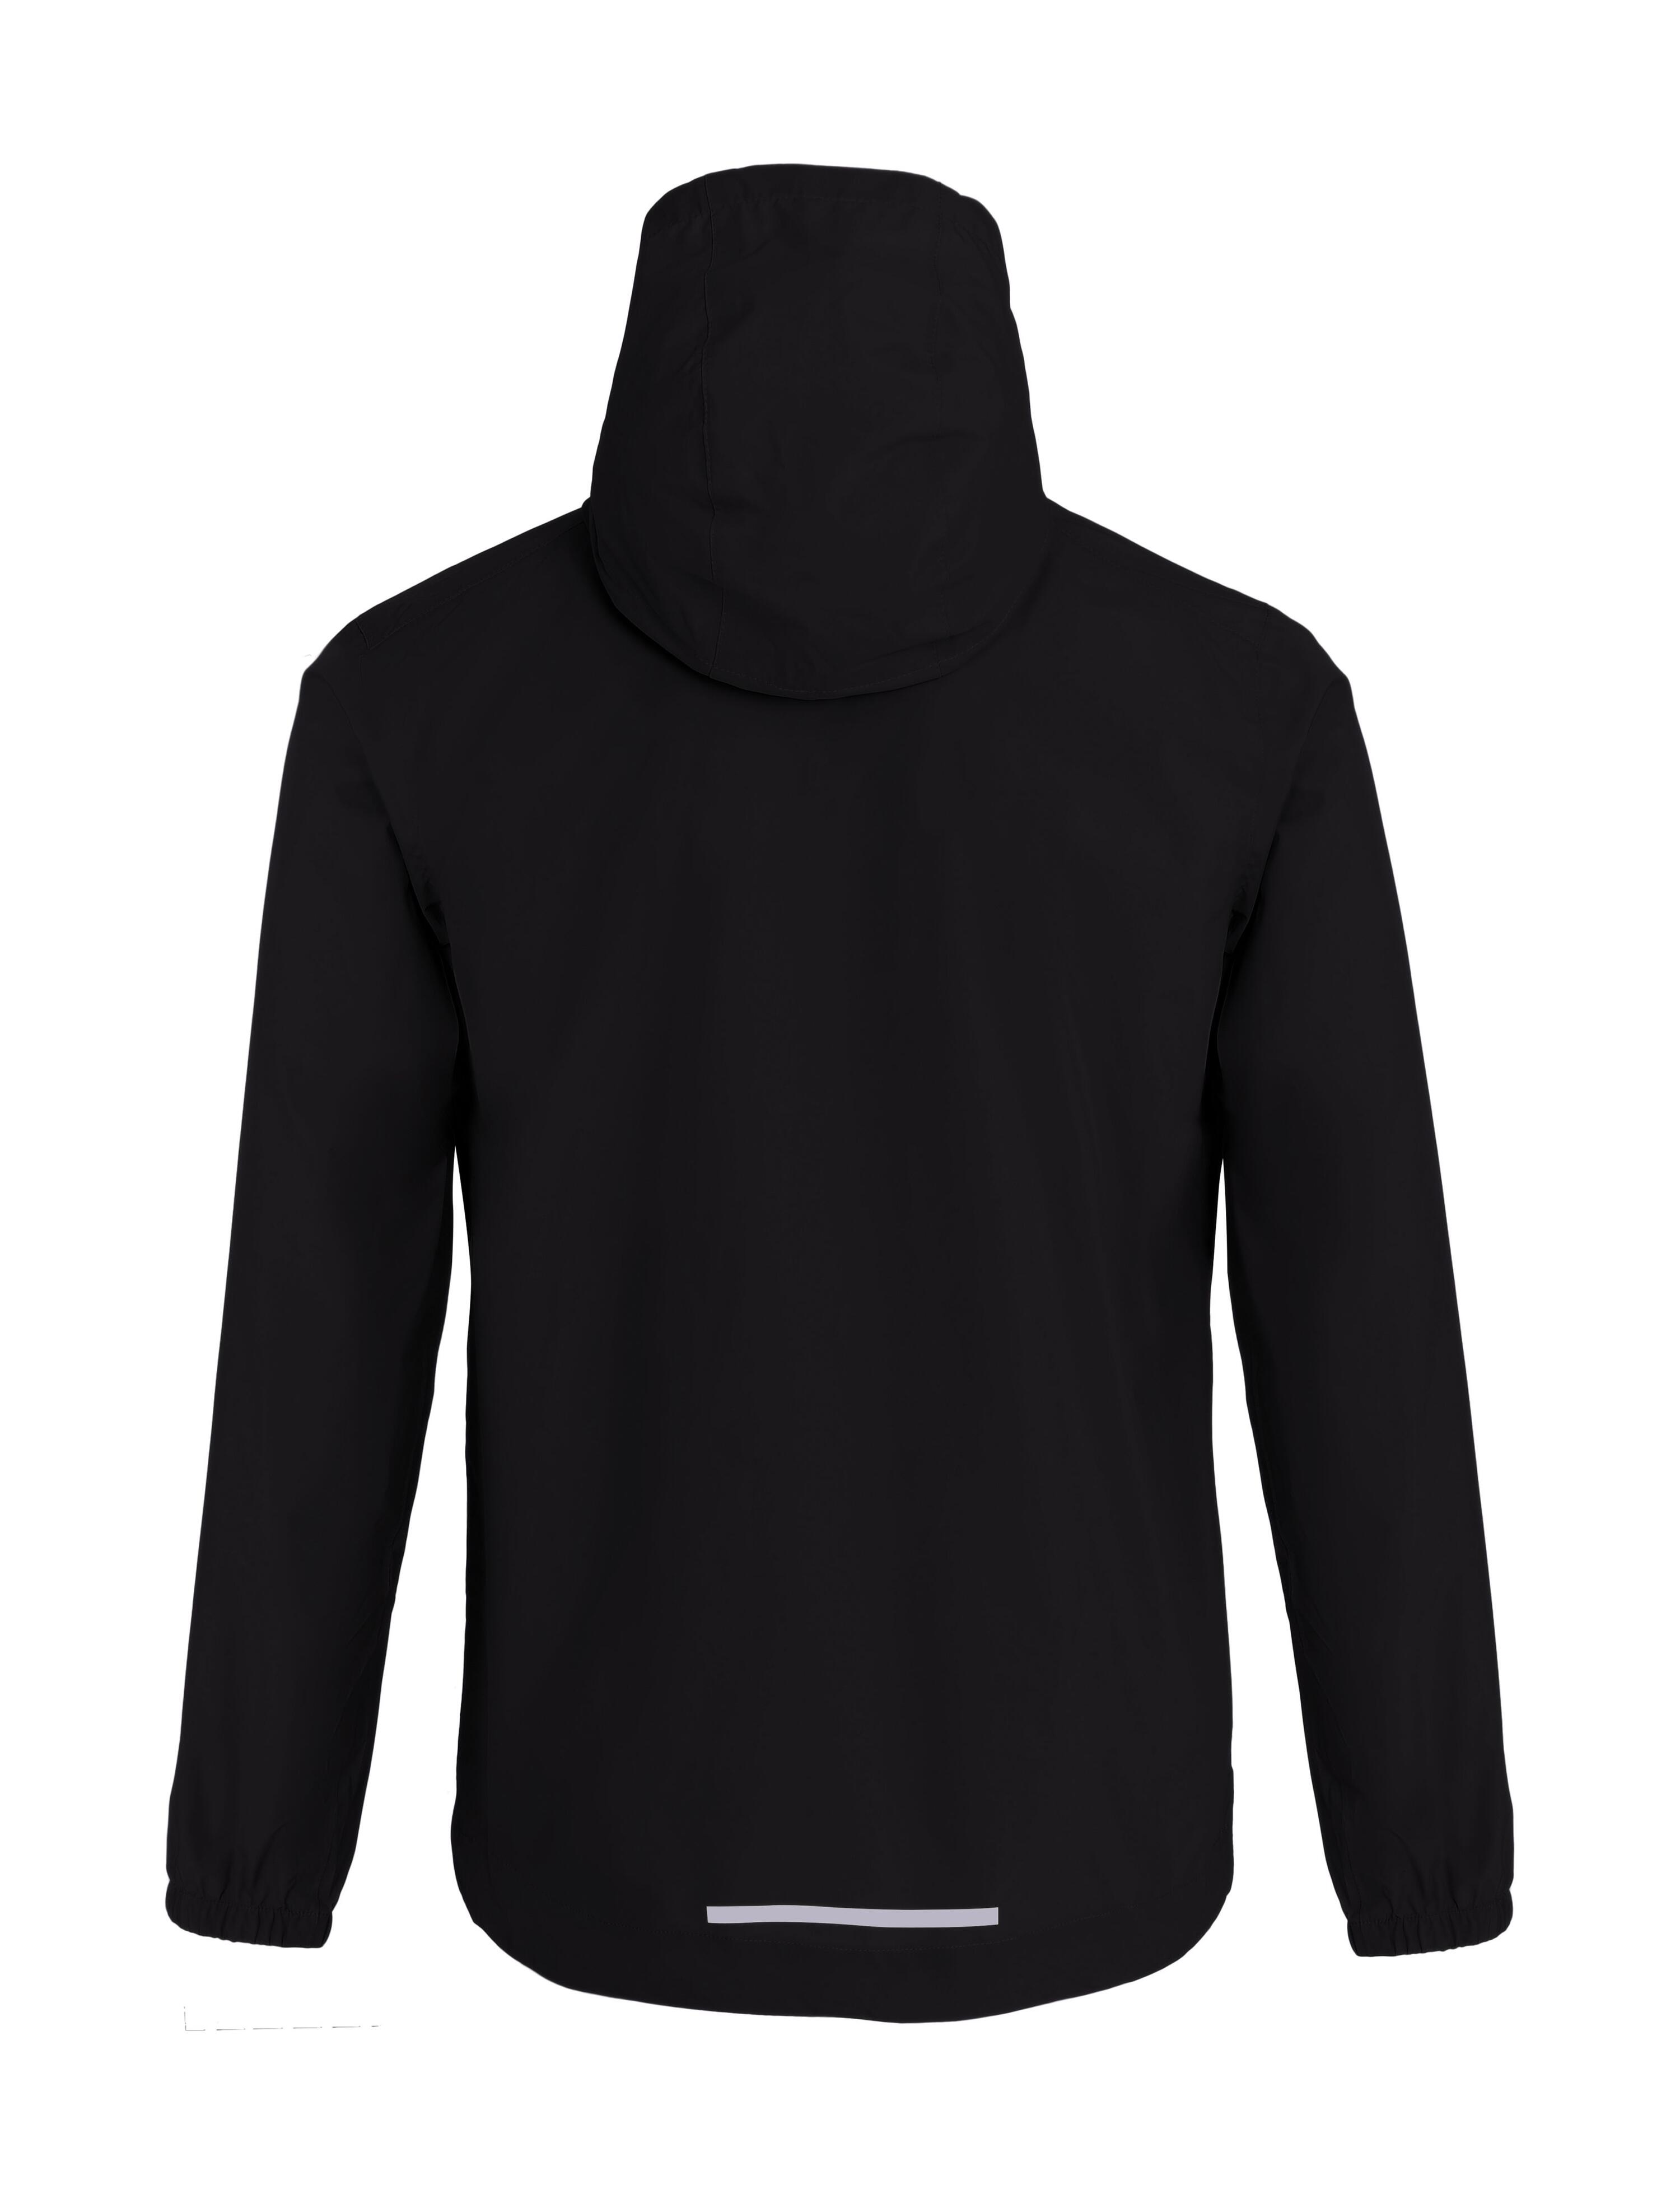 Boys' AirLite Rain Jacket with Zip Pockets - Black 3/5